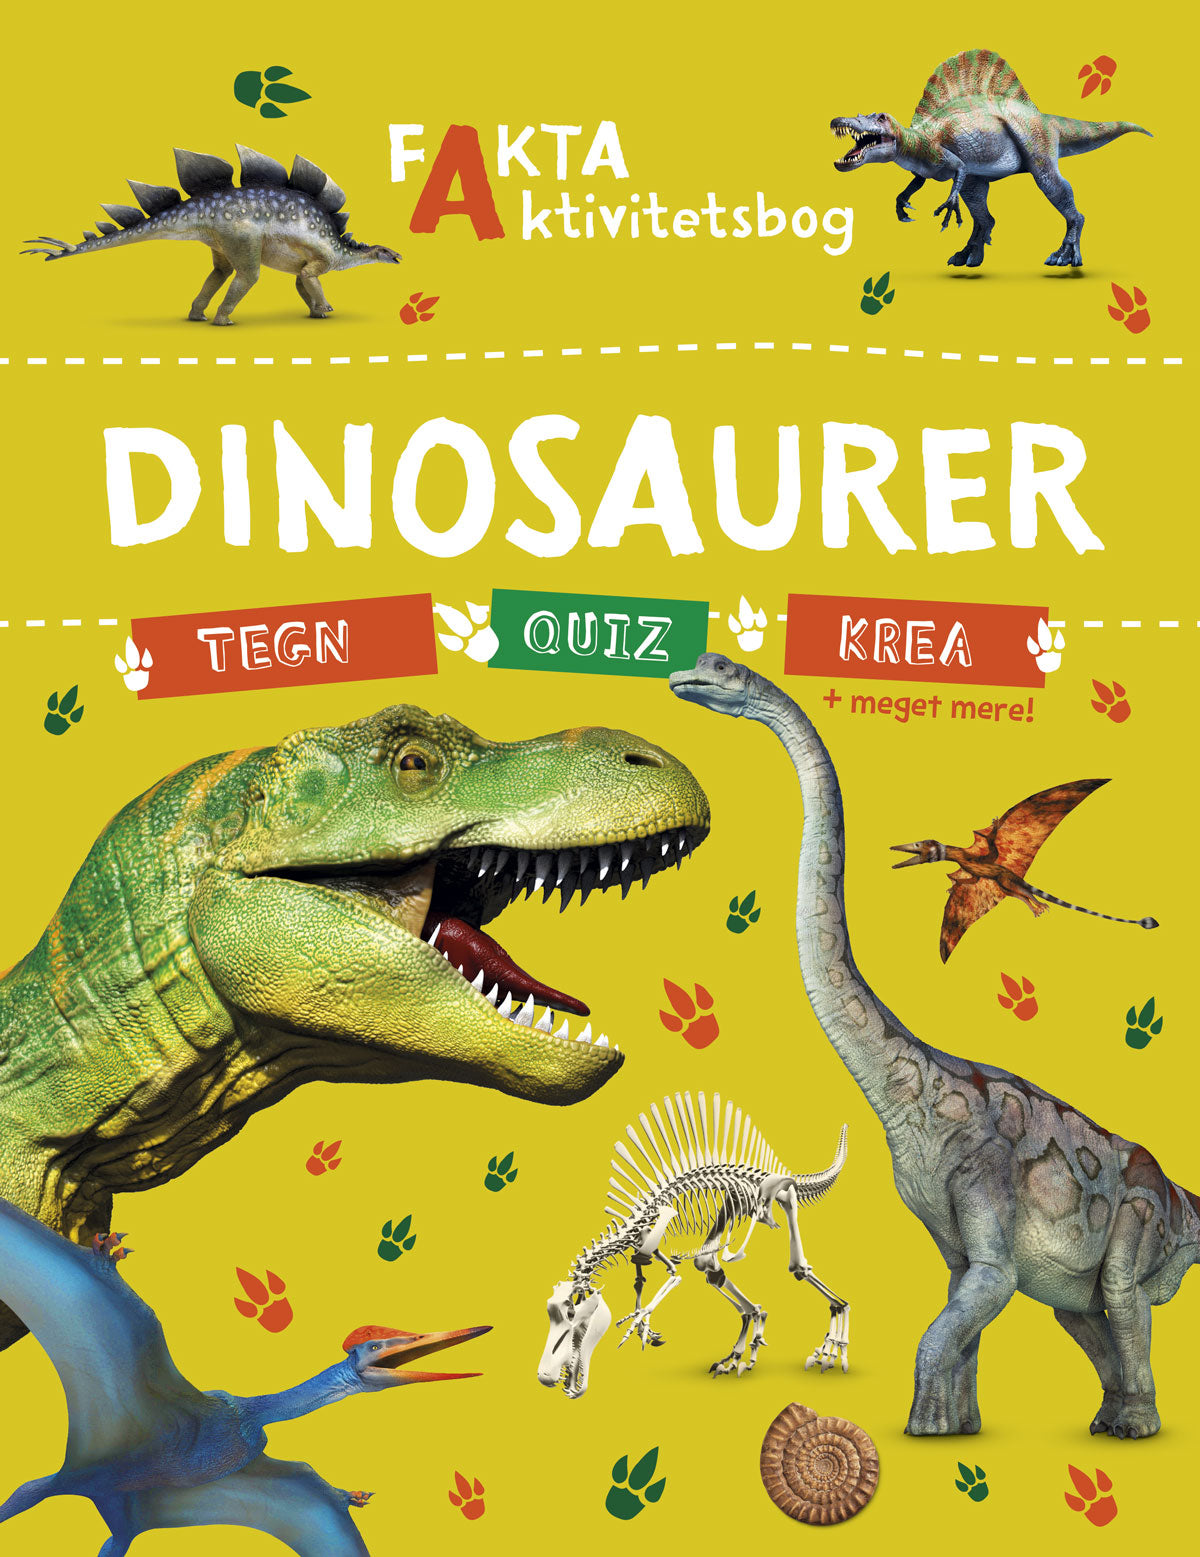 Se Fakta-aktivitetsbog: Dinosaurer - Bøger - Legekammeraten.dk hos Legekammeraten.dk